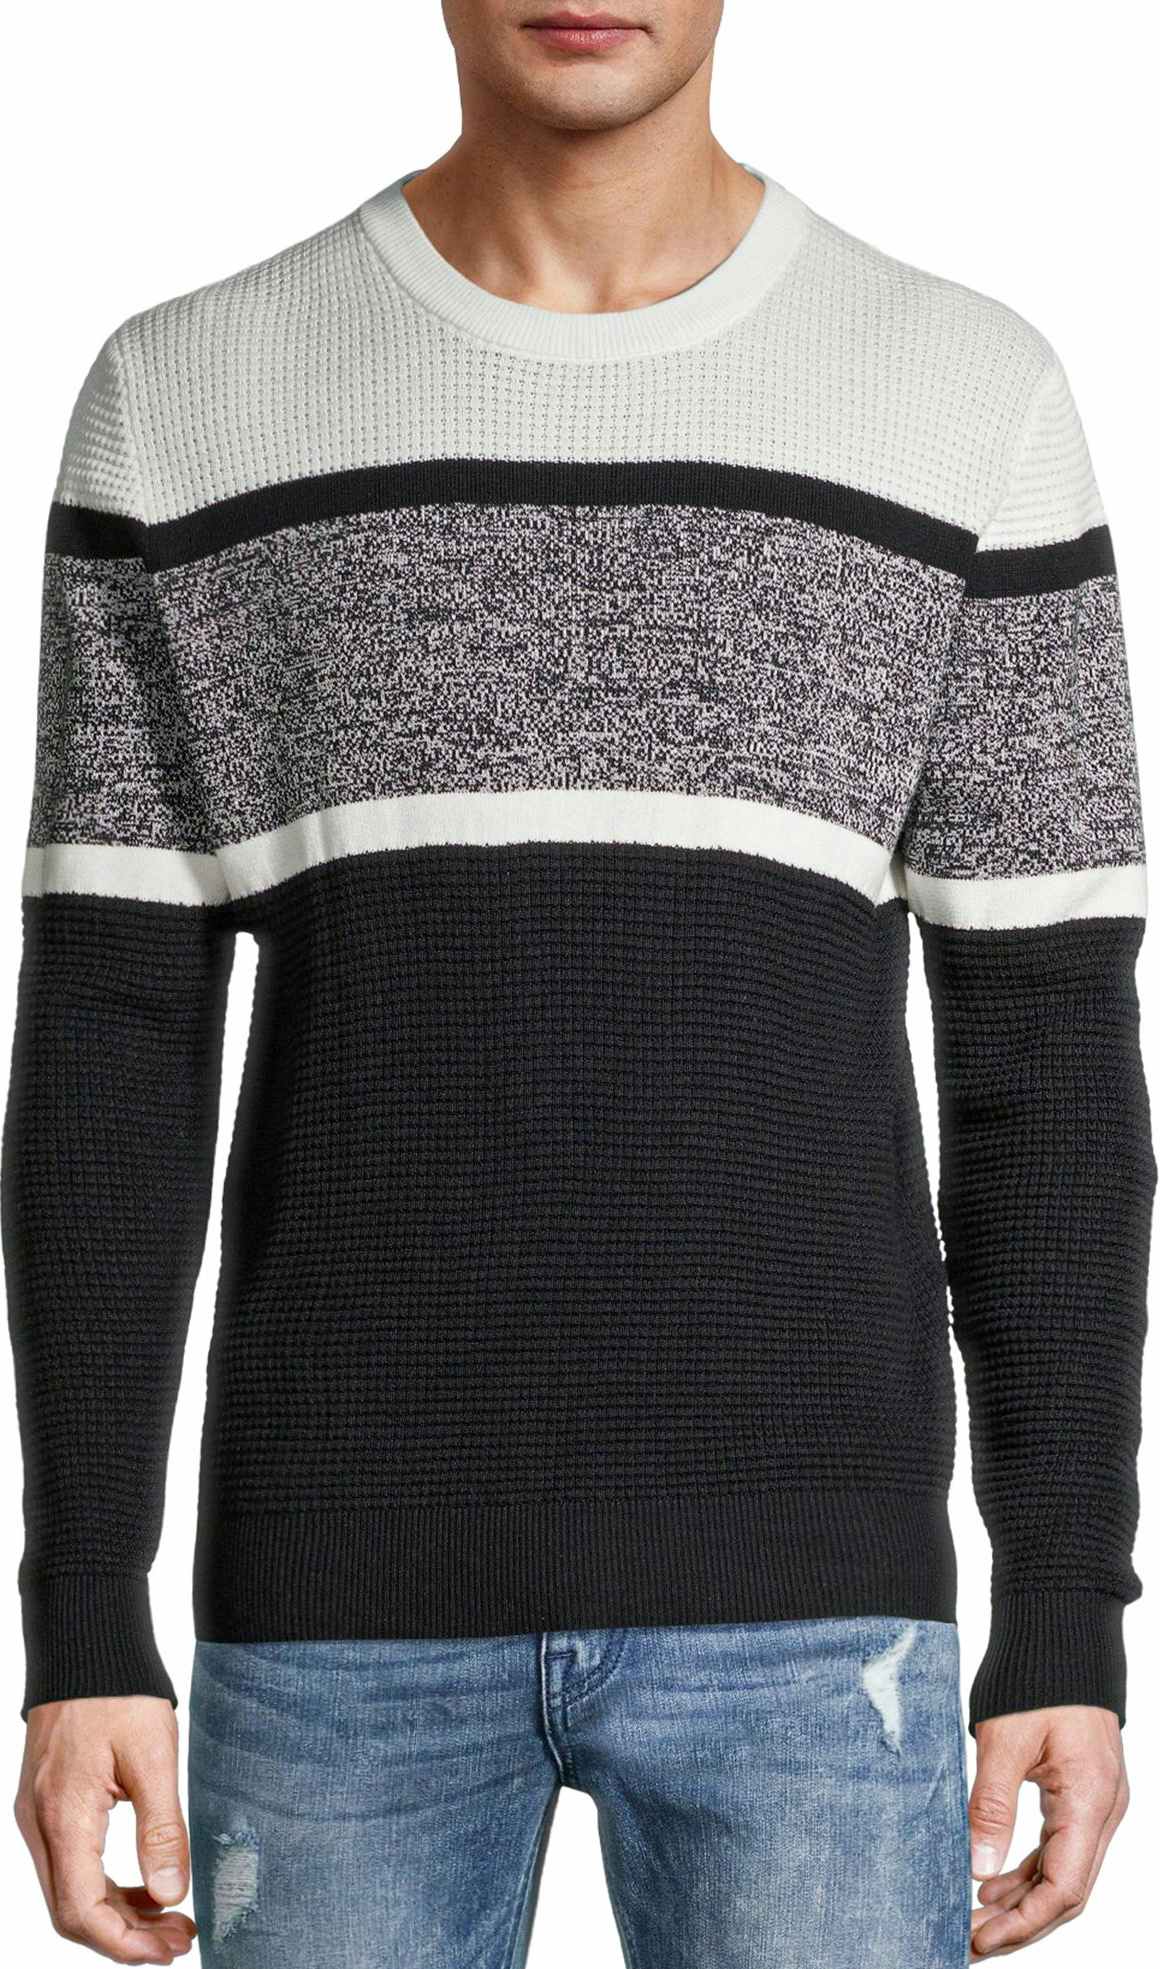 walmart-tribekka-44-marl-striped-sweater-2022